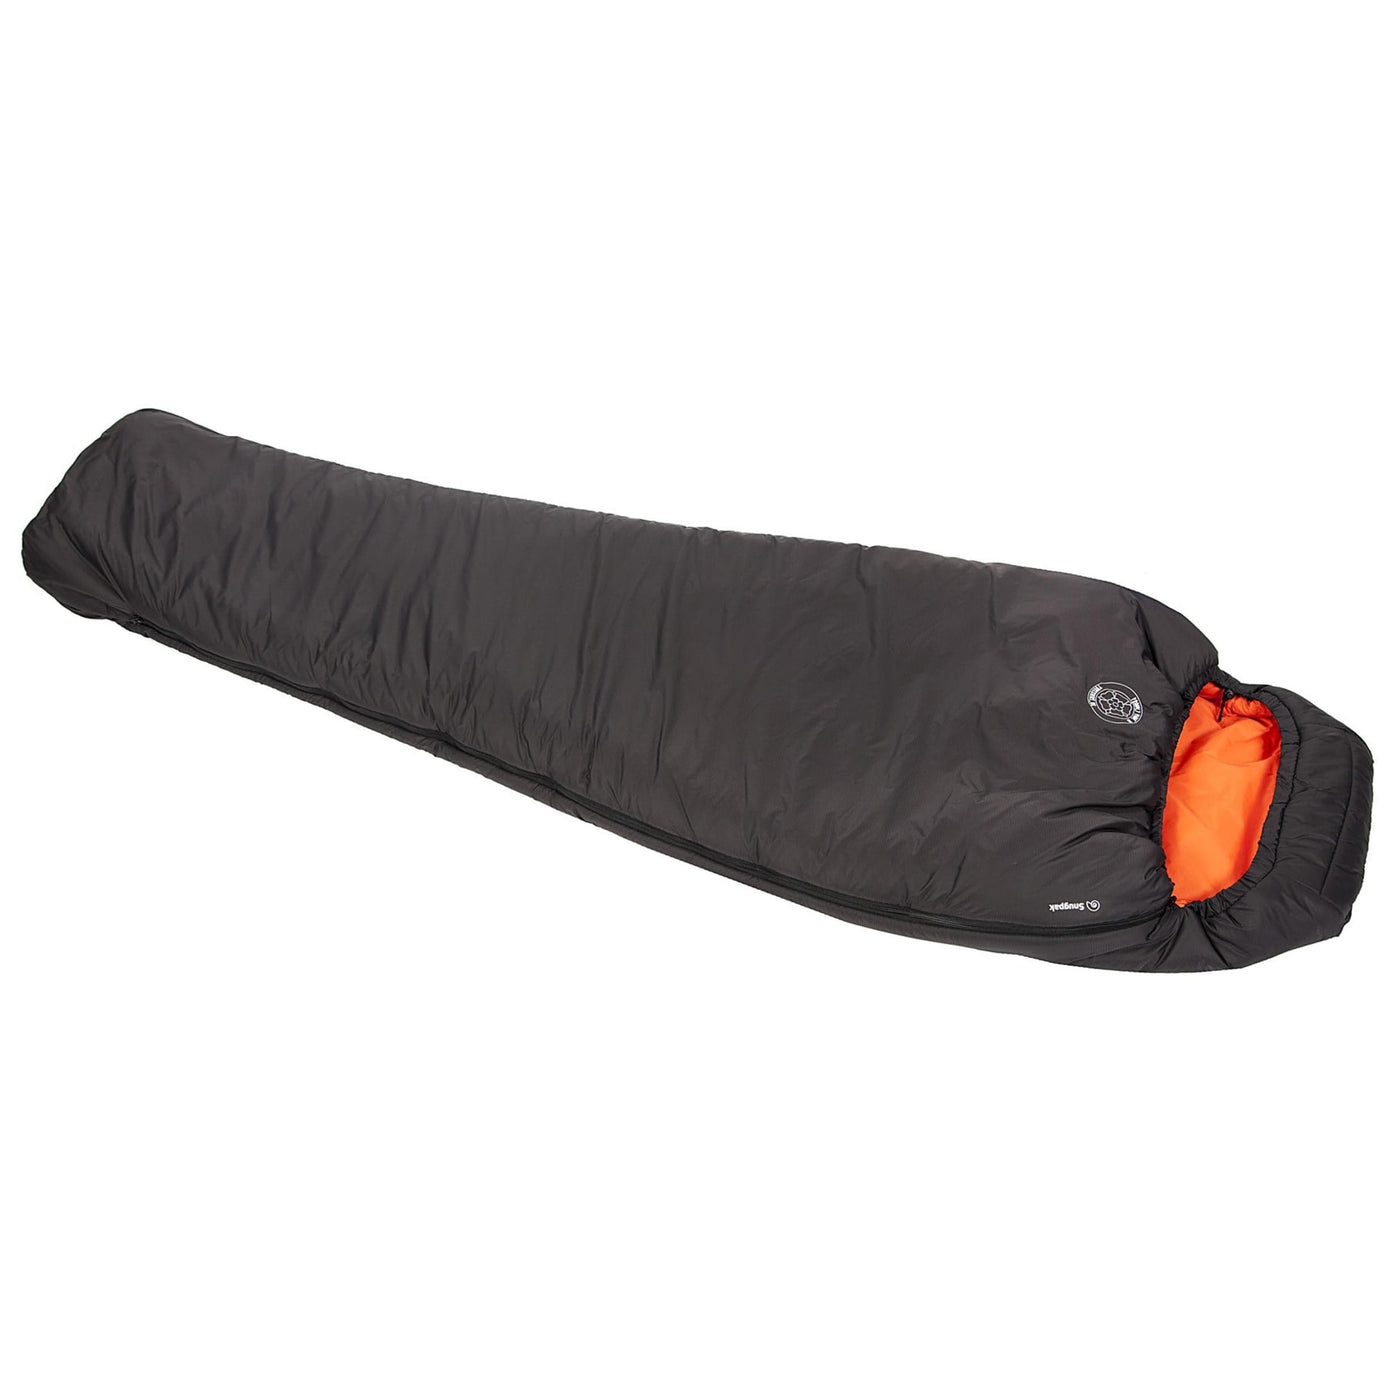 Snugpak Snugpak Softie 12 Endeavour Sleeping Bag Black Zip Right hand Camping And Outdoor